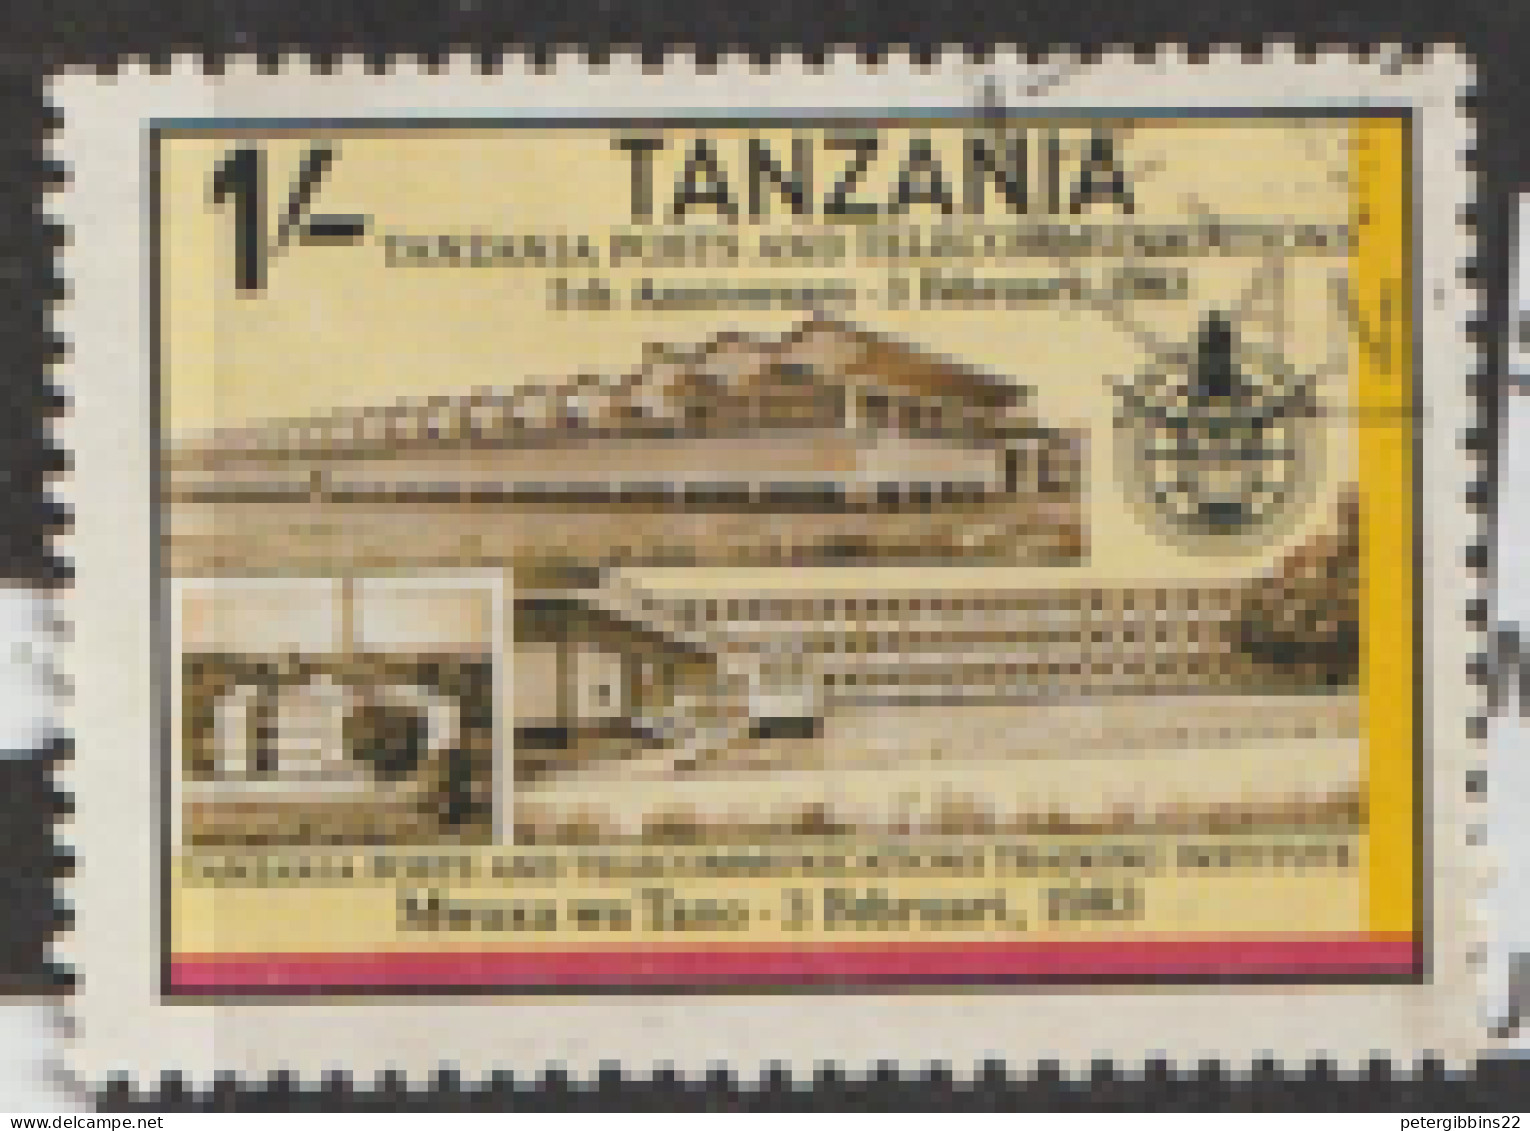 Tanzania   1982   SG 371  Tanzanian Post   Fine Used - Tanzanie (1964-...)